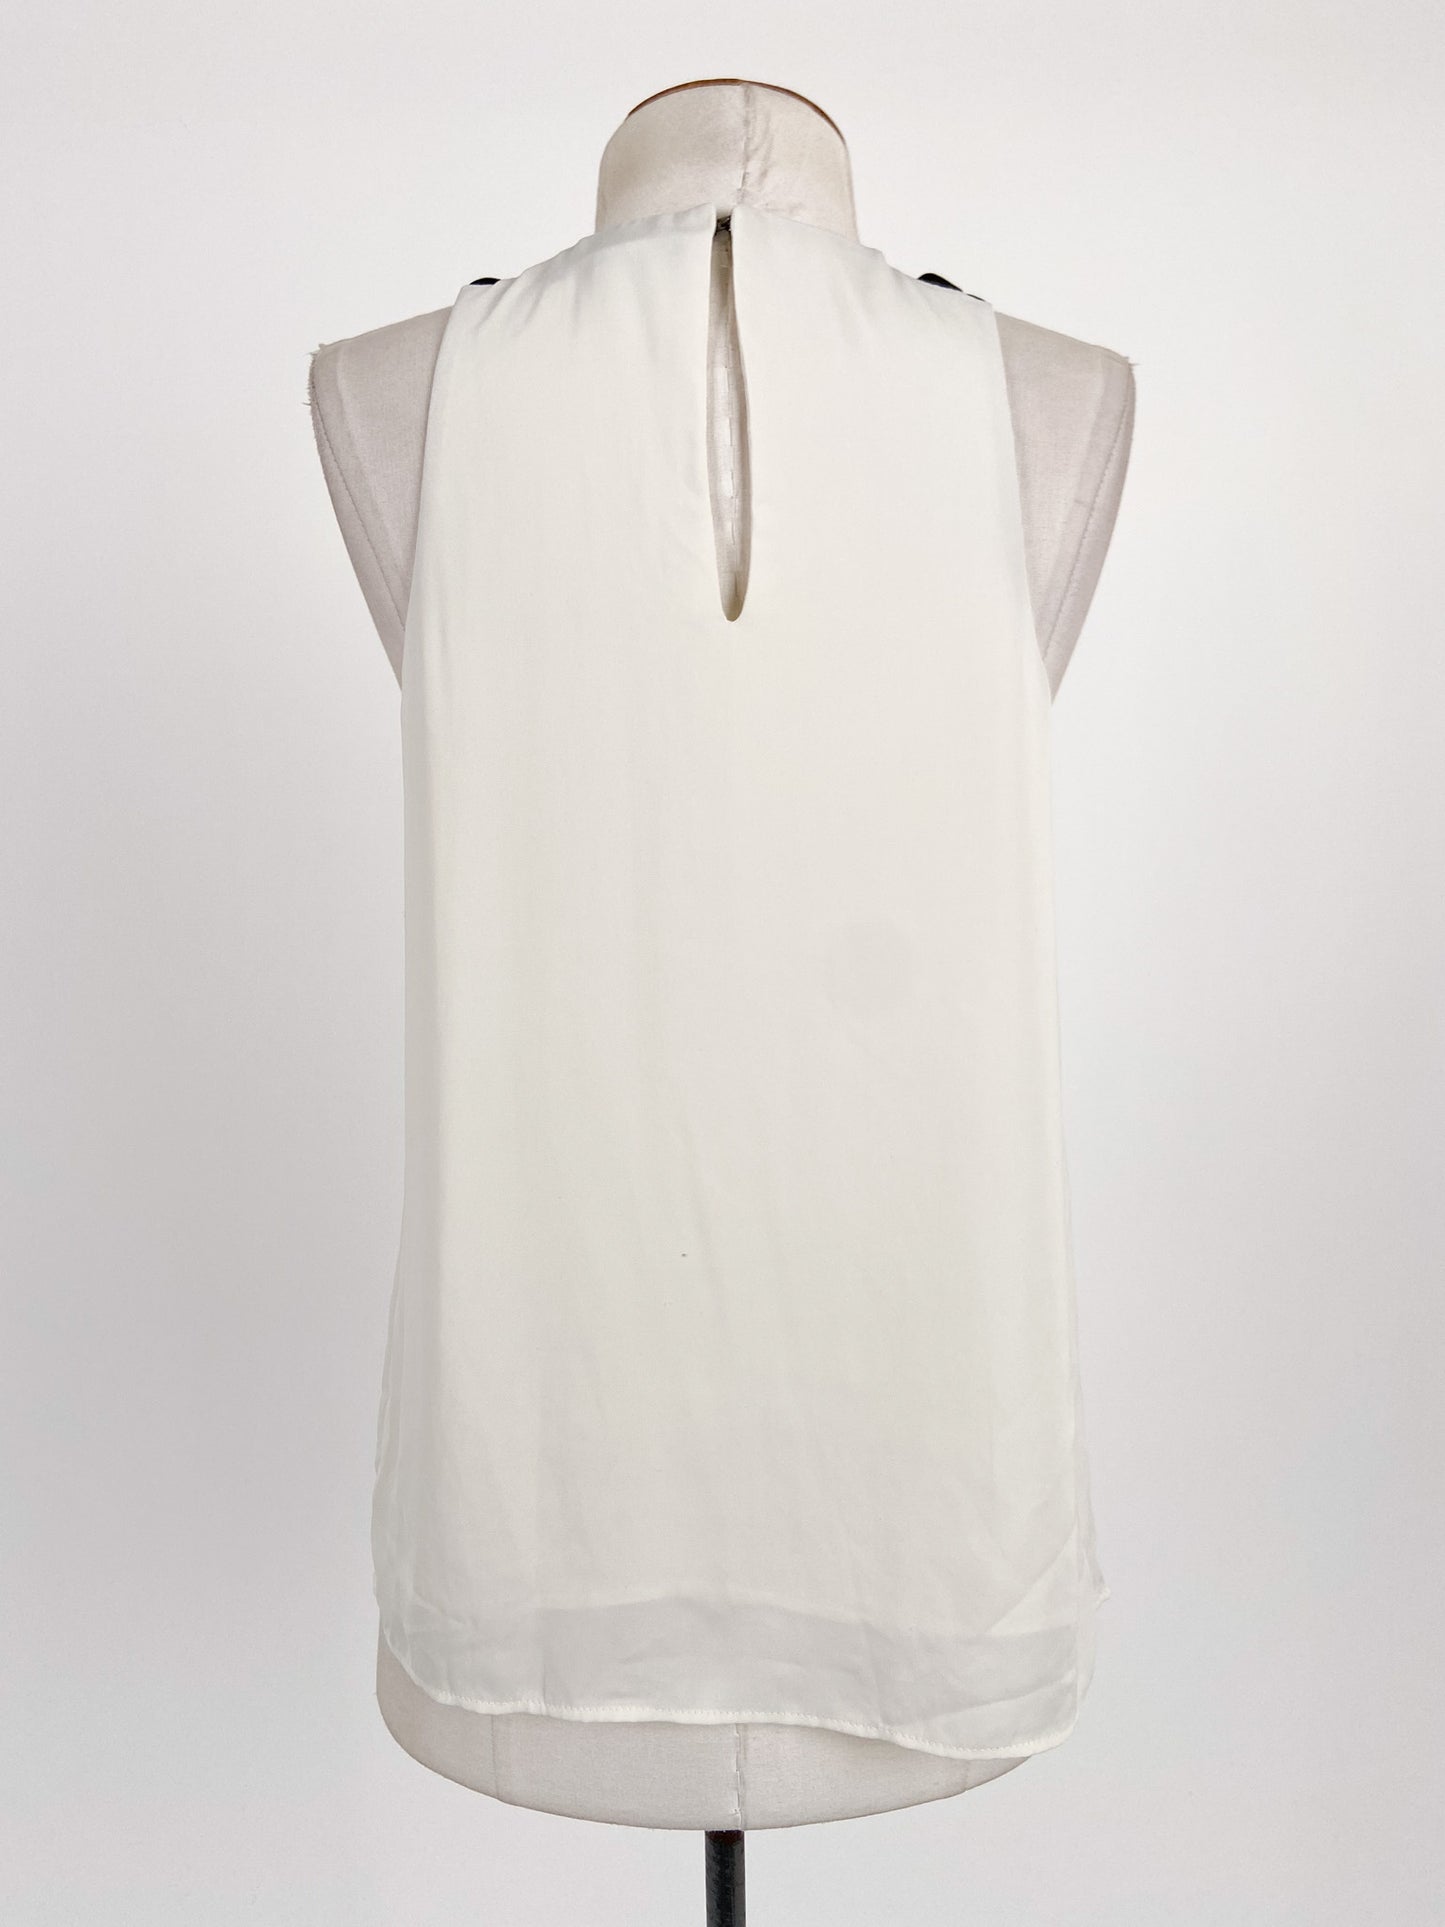 Mango | White Workwear Top | Size XS